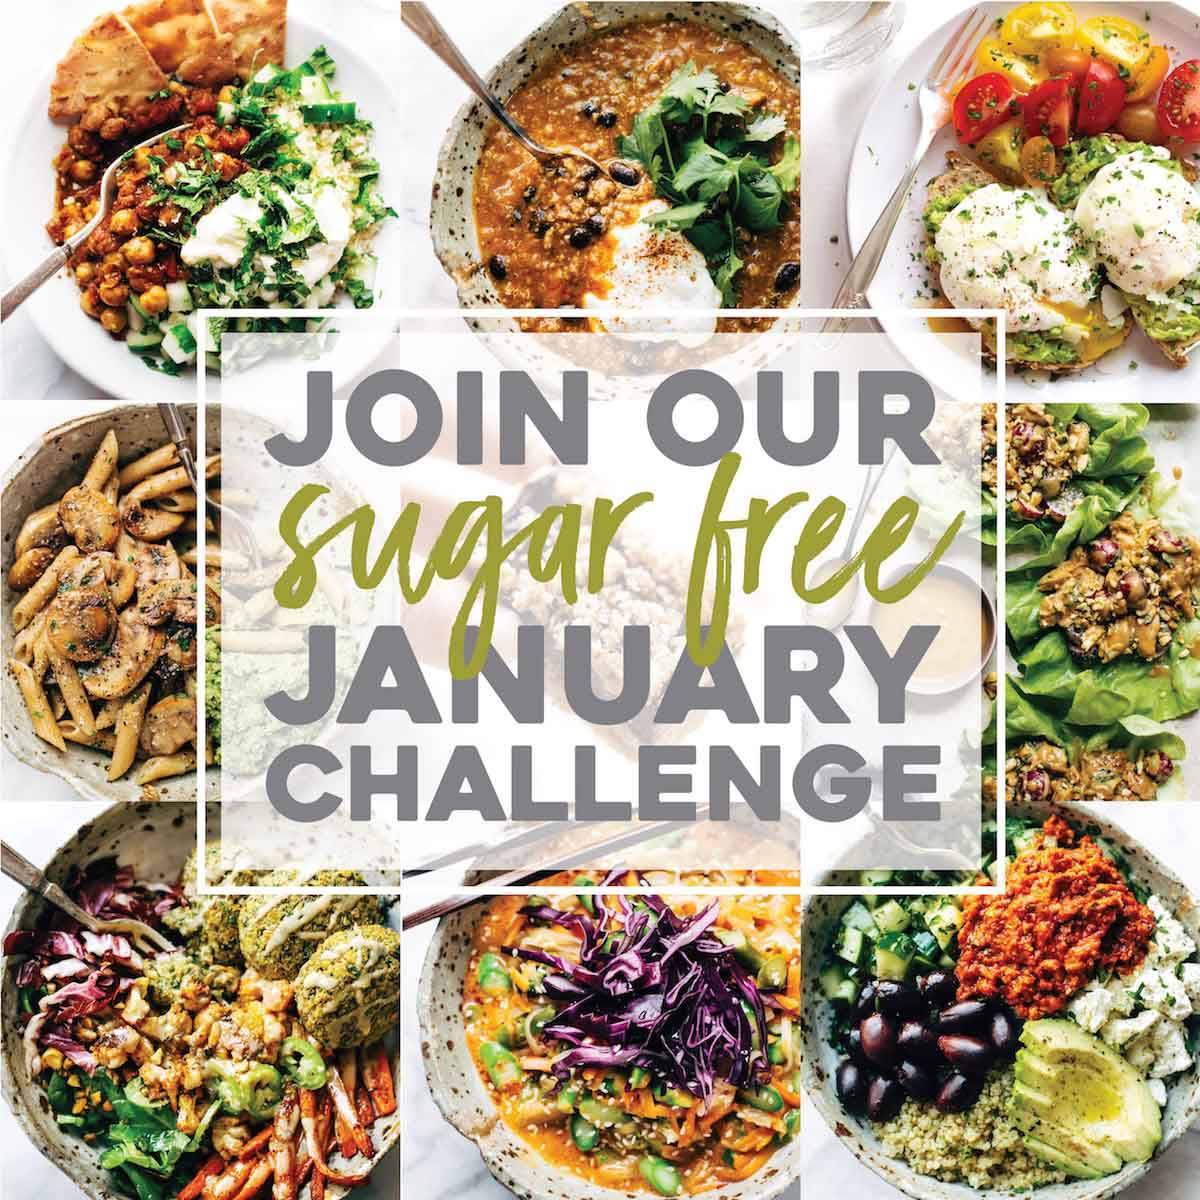 Sugar Free January Challenge header